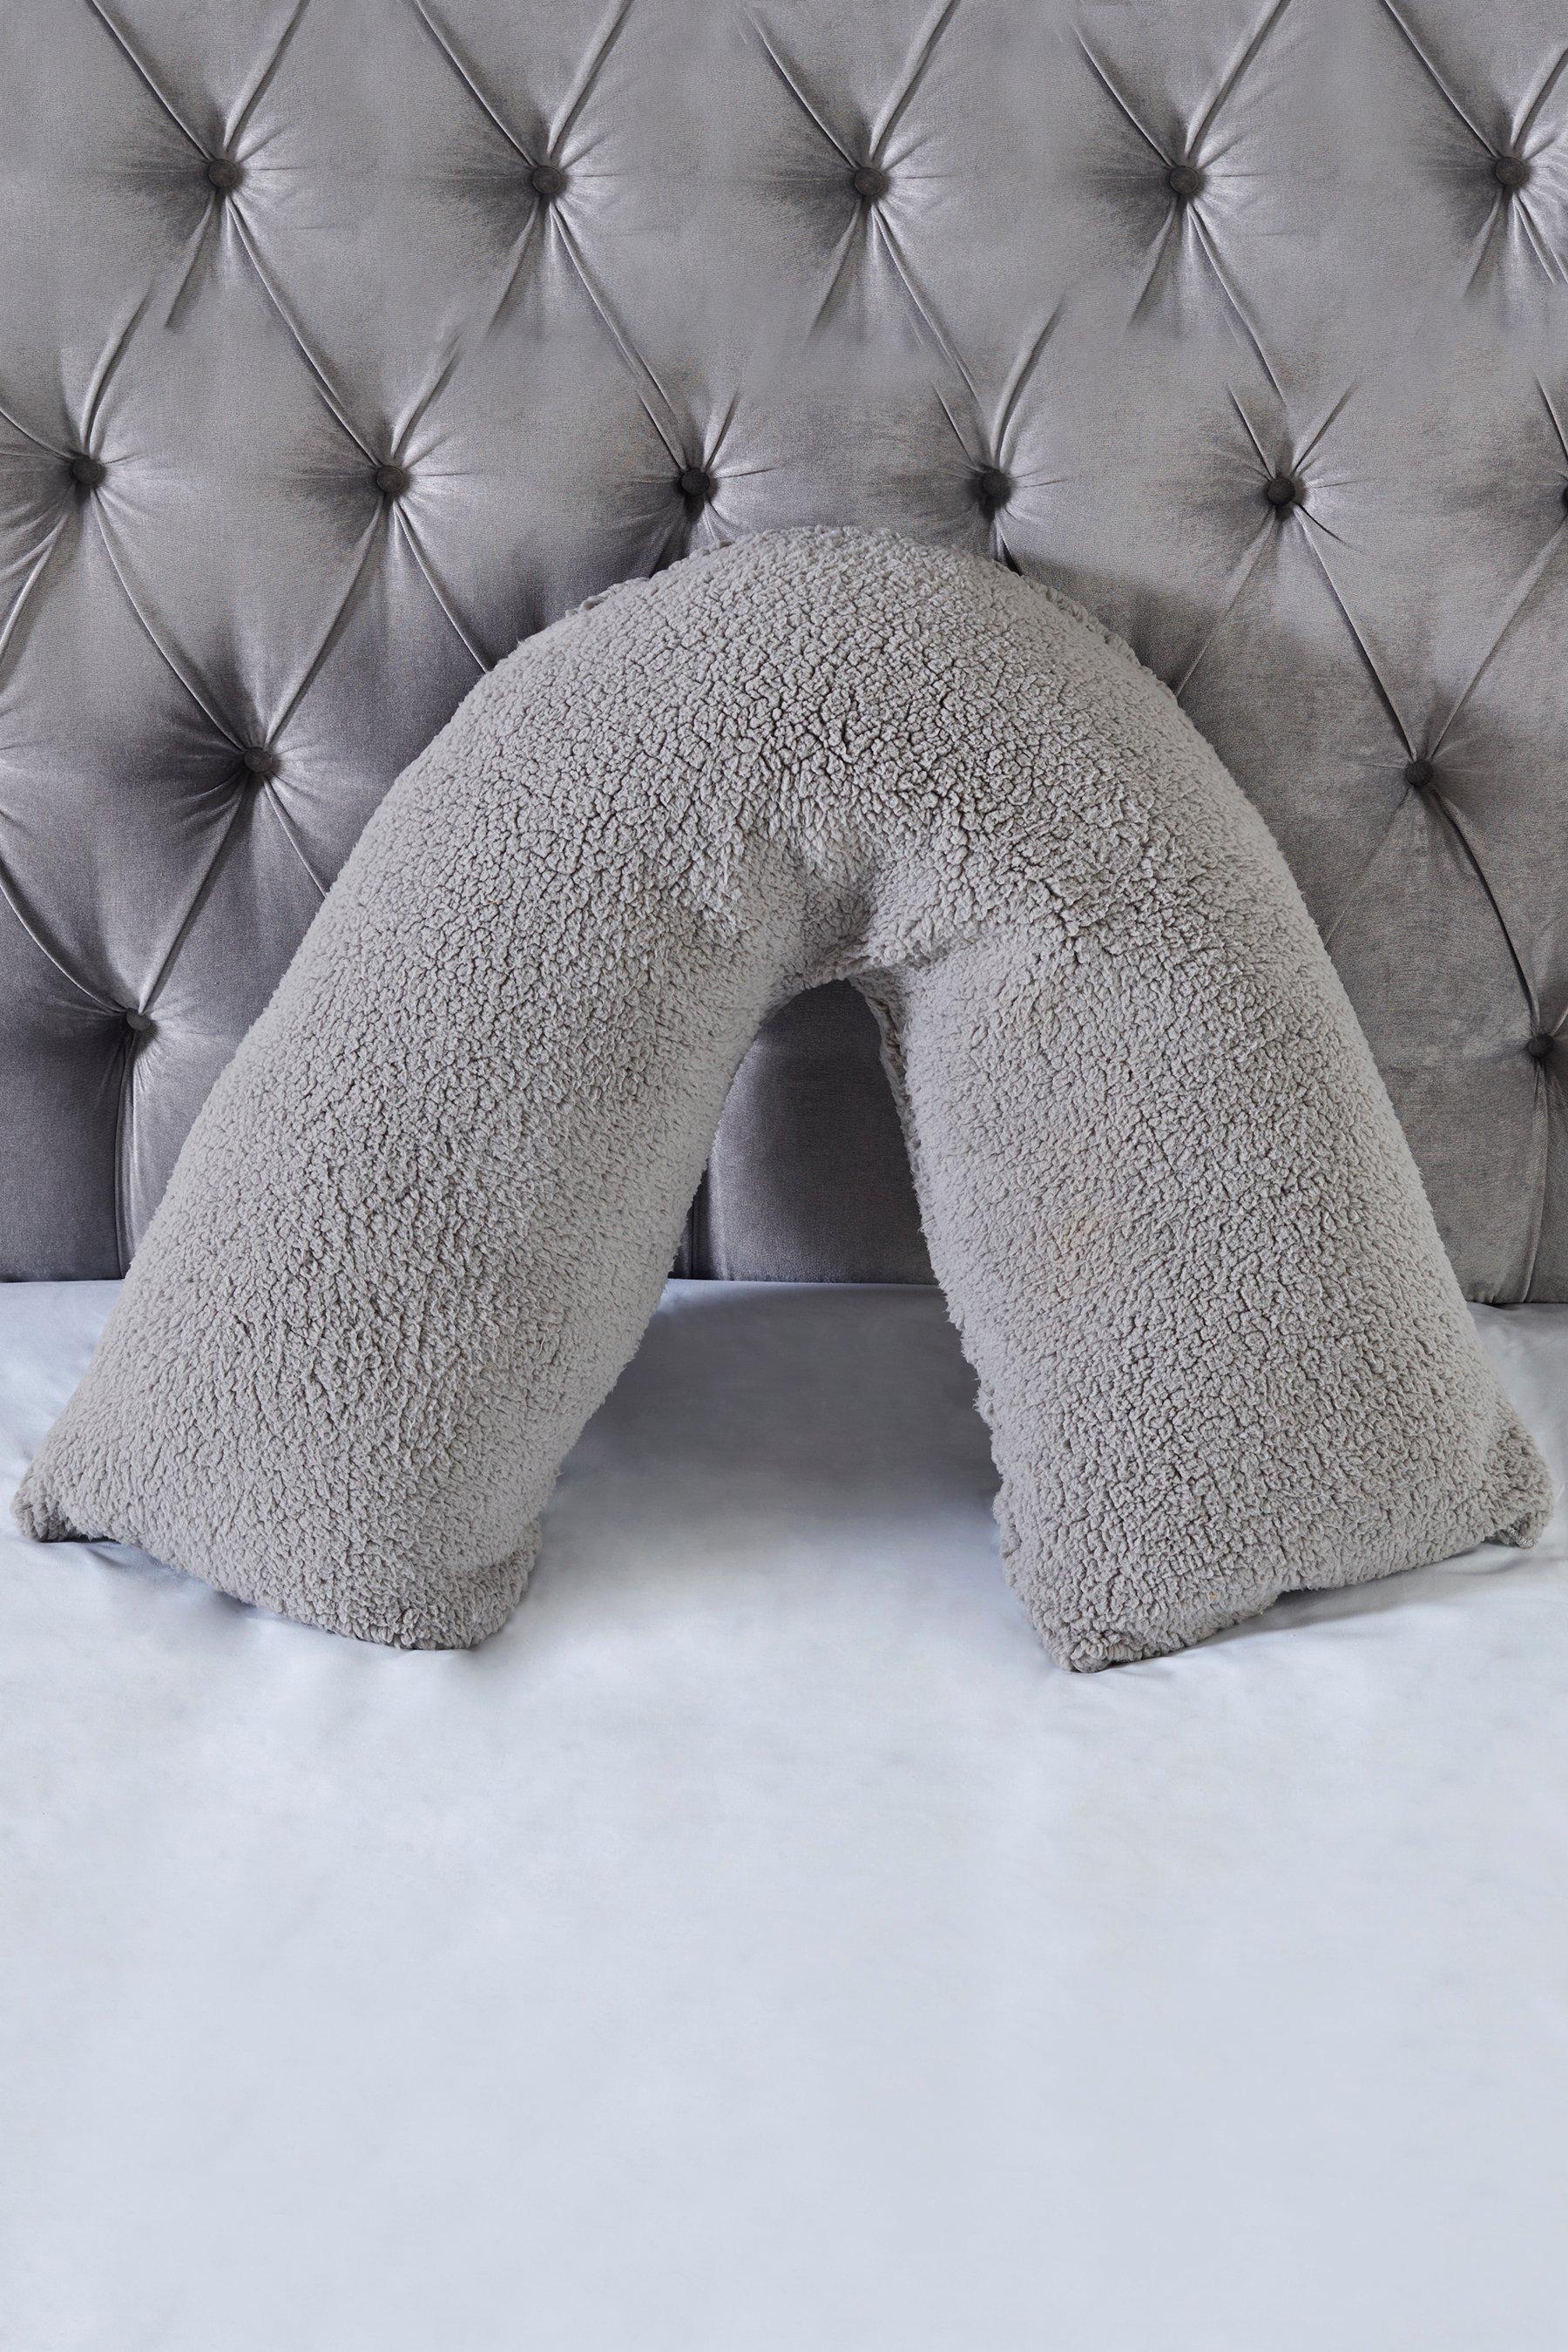 teddy bear v shaped pillow